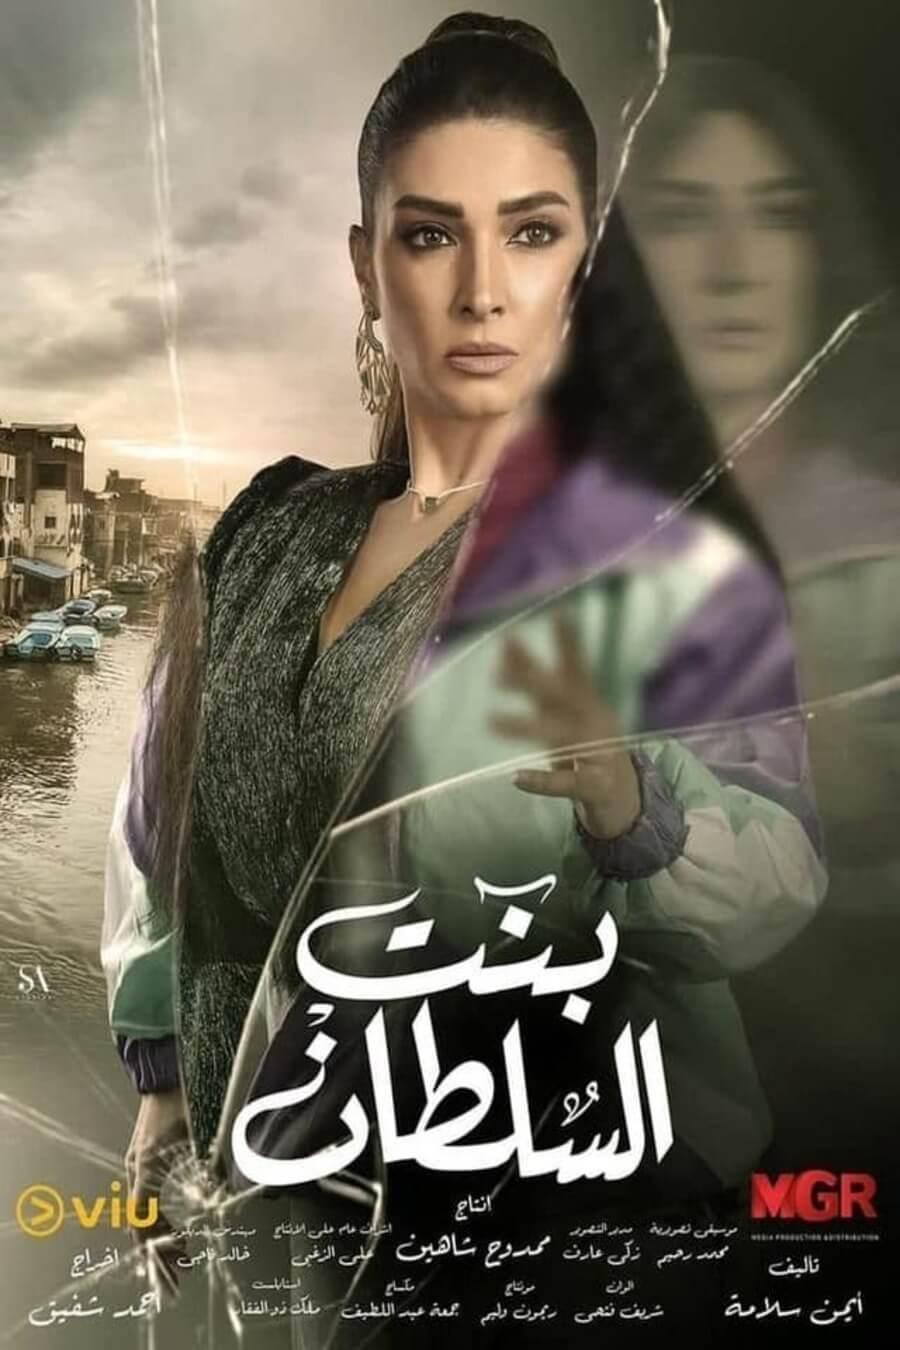 TV ratings for Bint El Sultan (بنت السلطان) in Canada. viu TV series